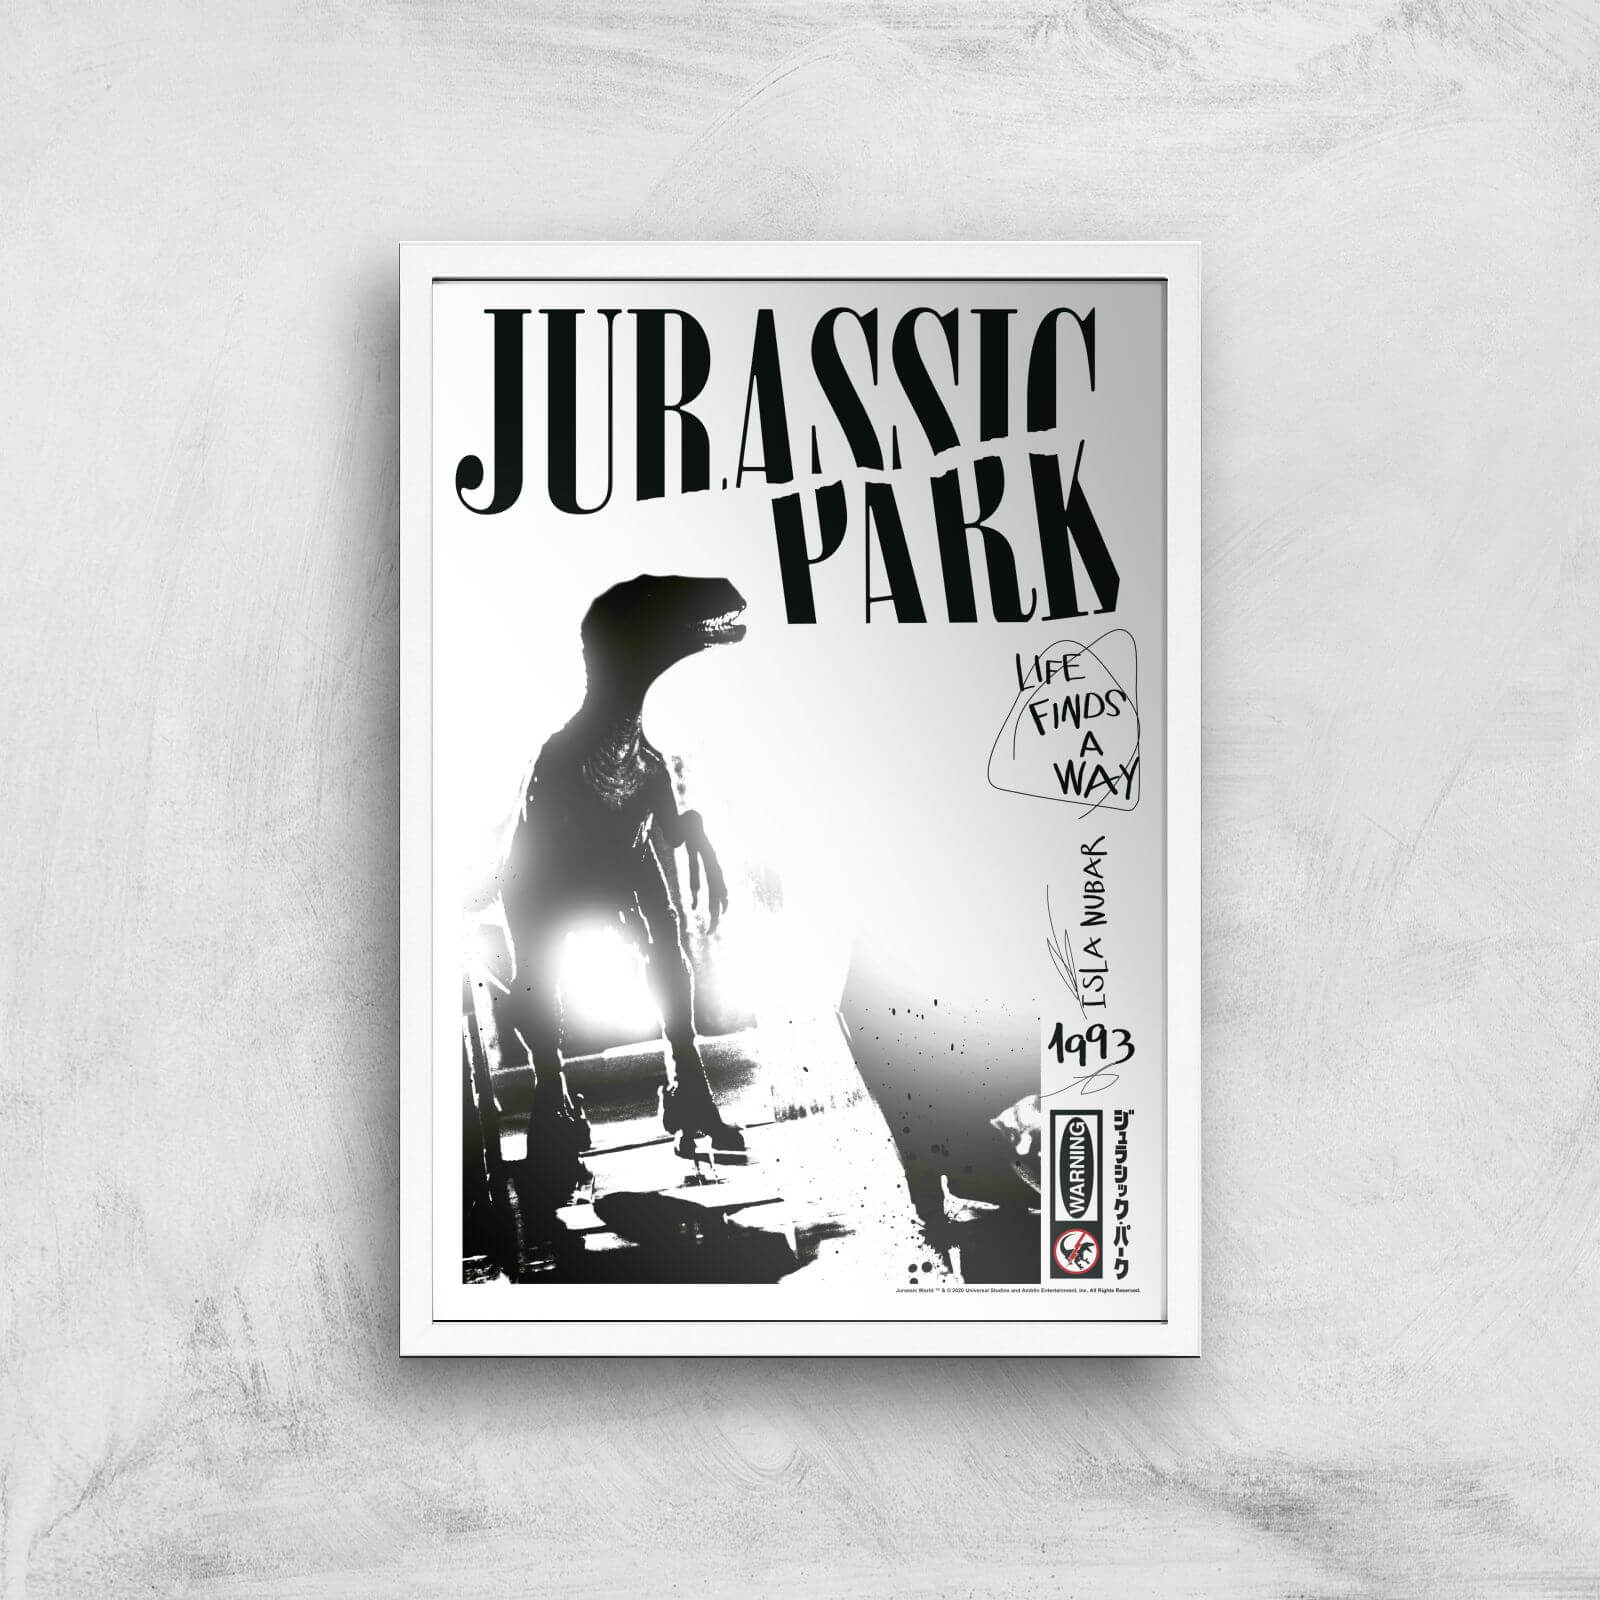 Jurassic Park Life Finds A Way Giclee Art Print - A3 - White Frame